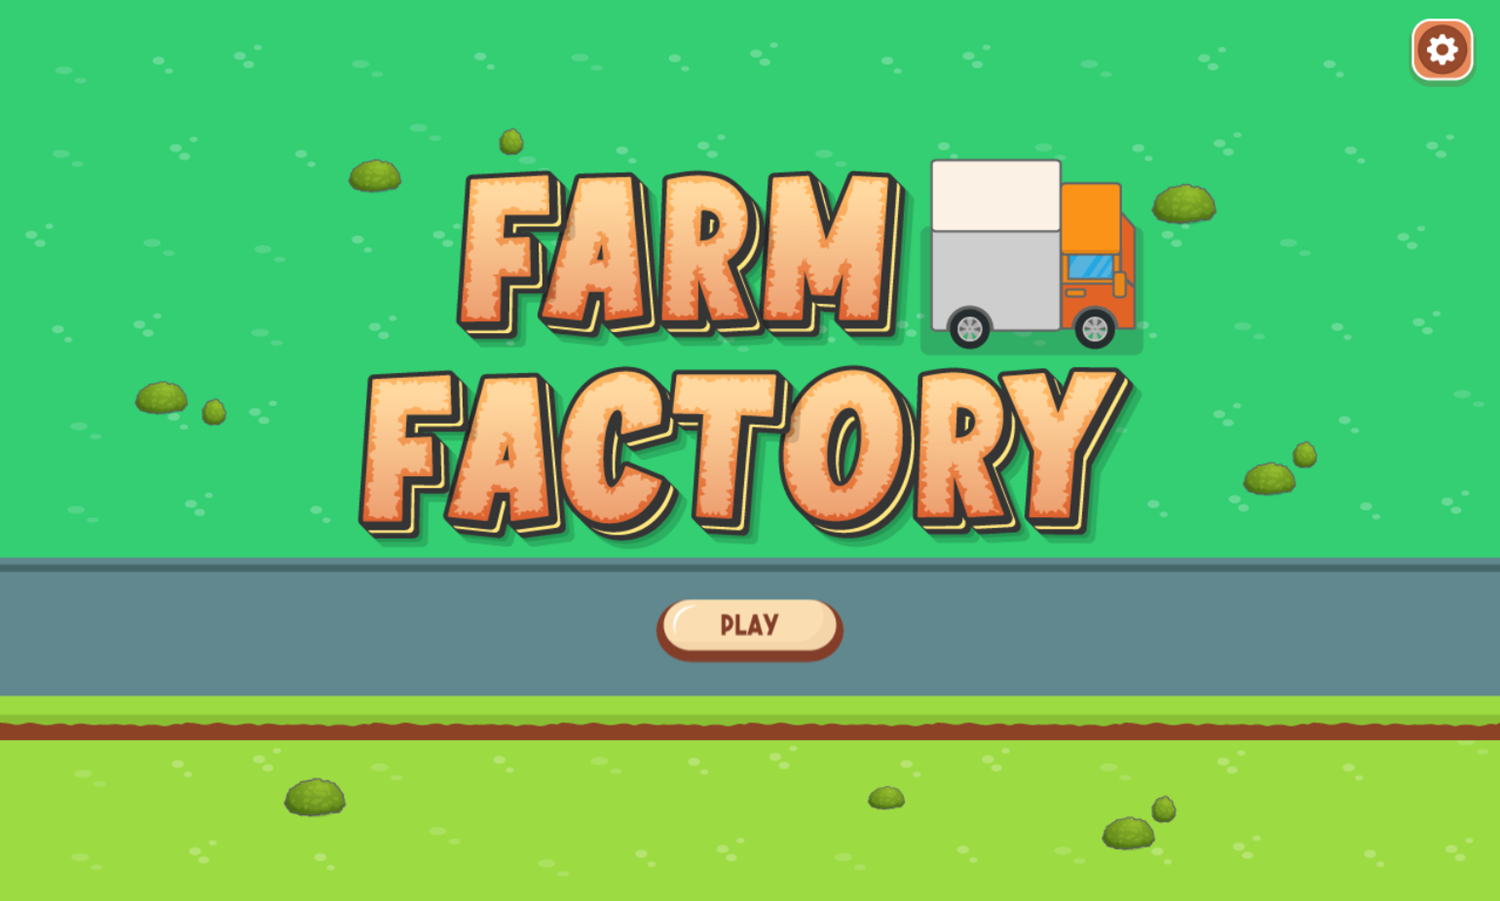 Farm Factory Game Welcome Screen Screenshot.